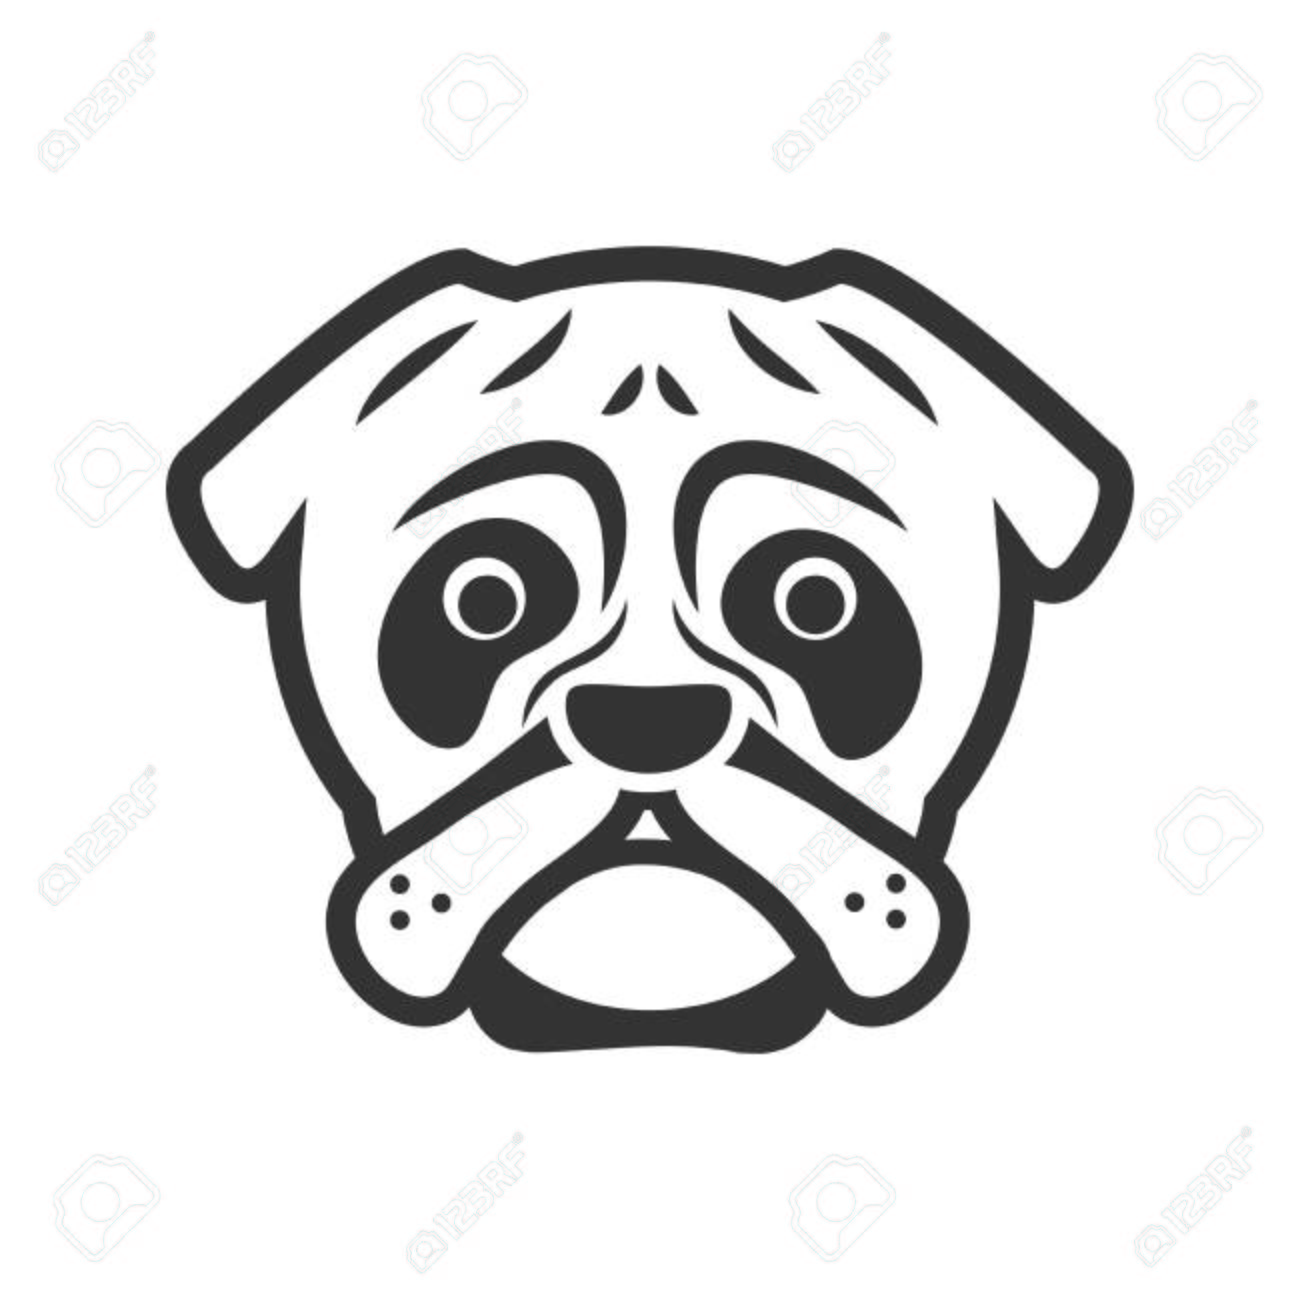 Pug icons | Noun Project